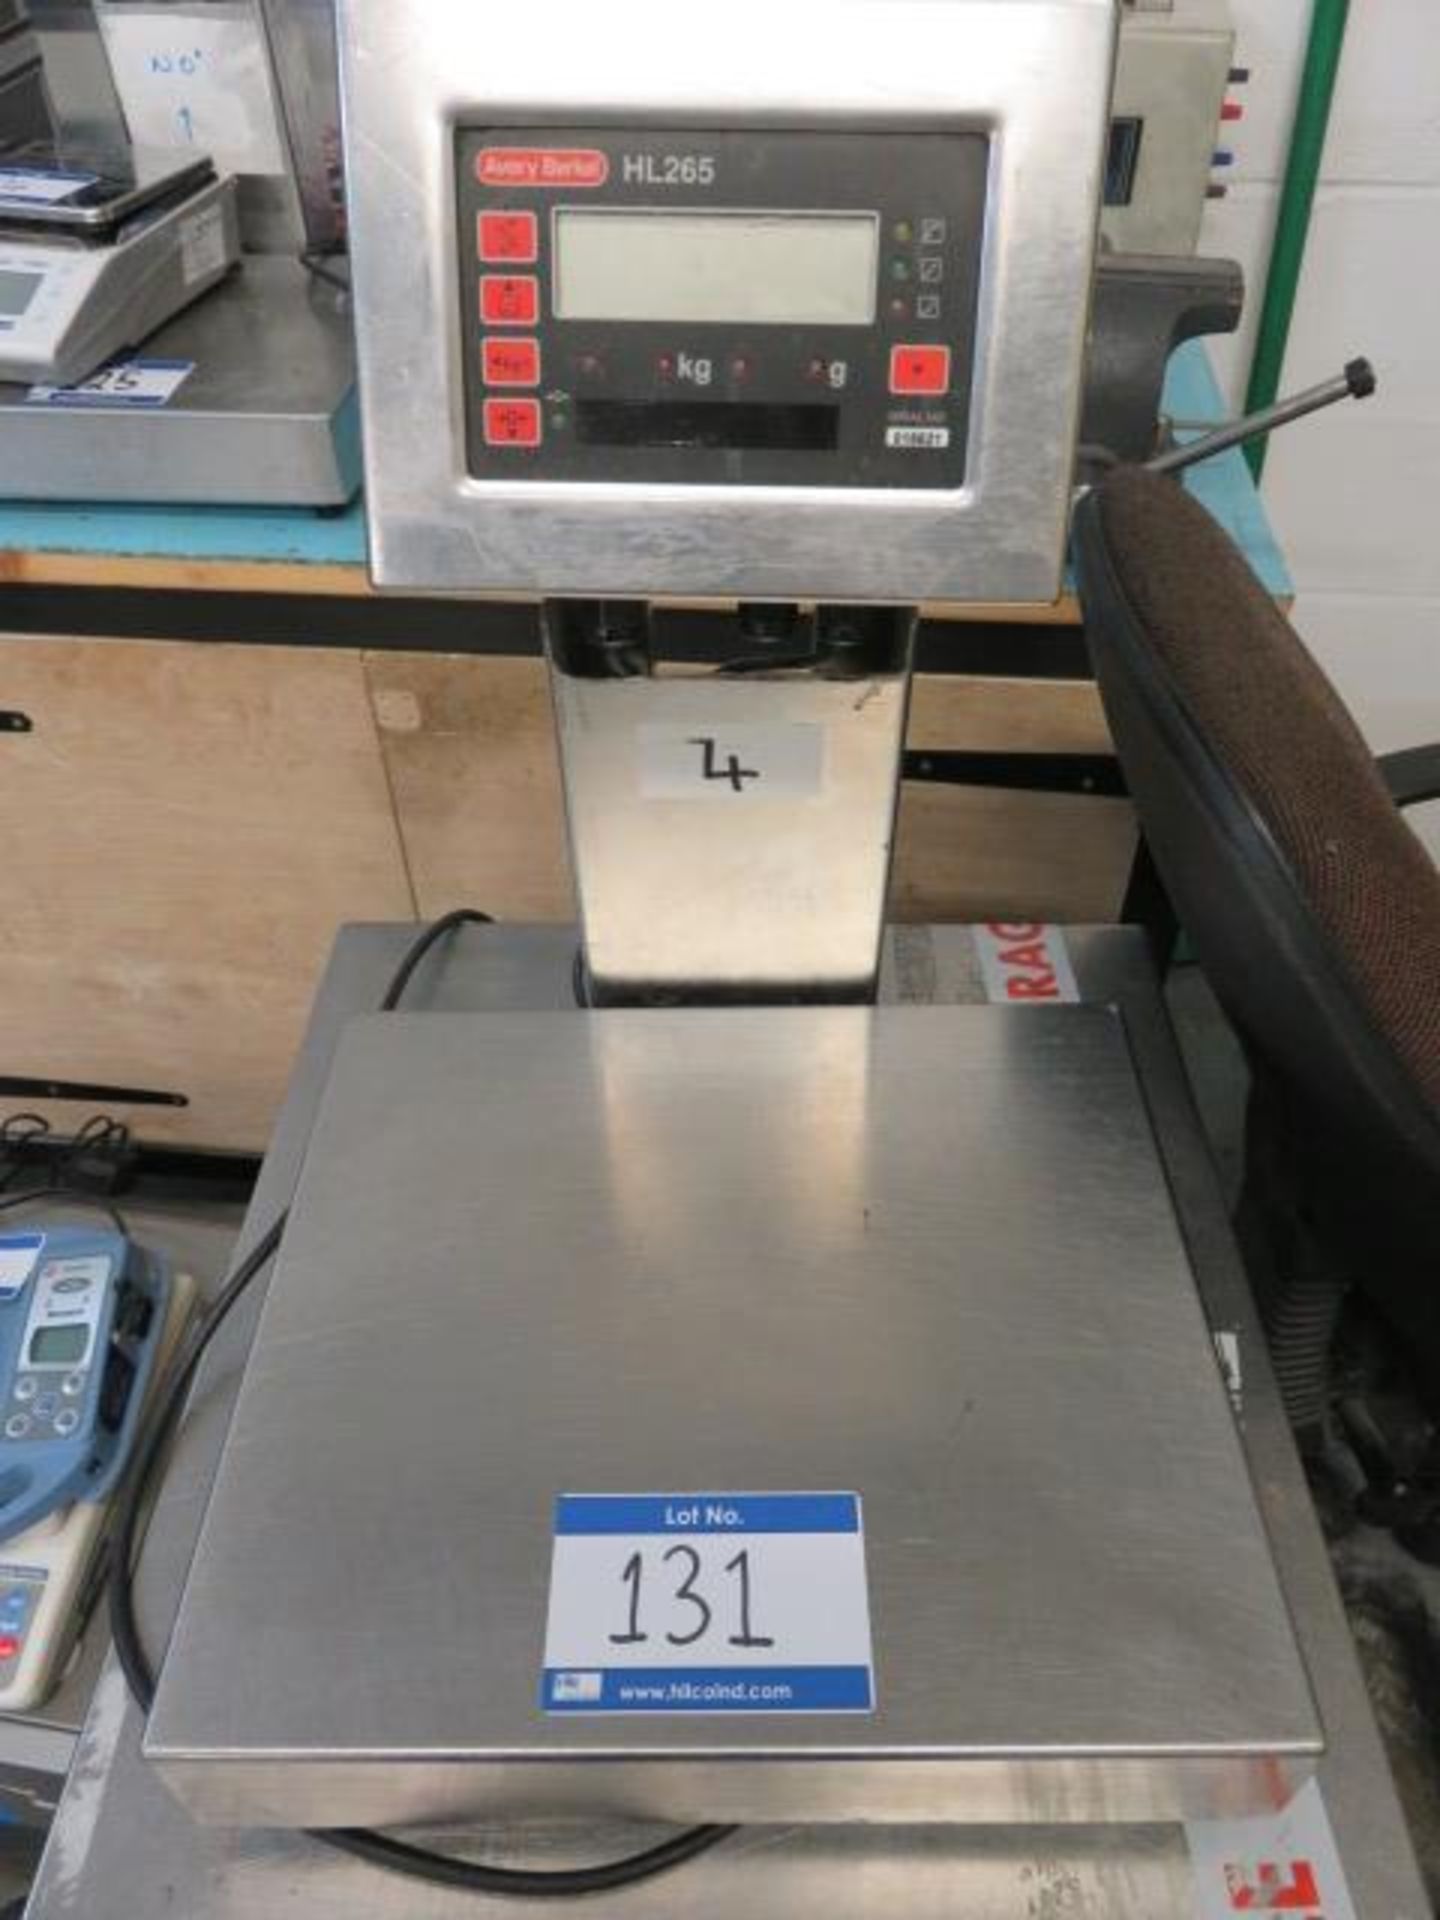 Avert Berkel HL265 Digital Weigh Scale Serial No. 018821.